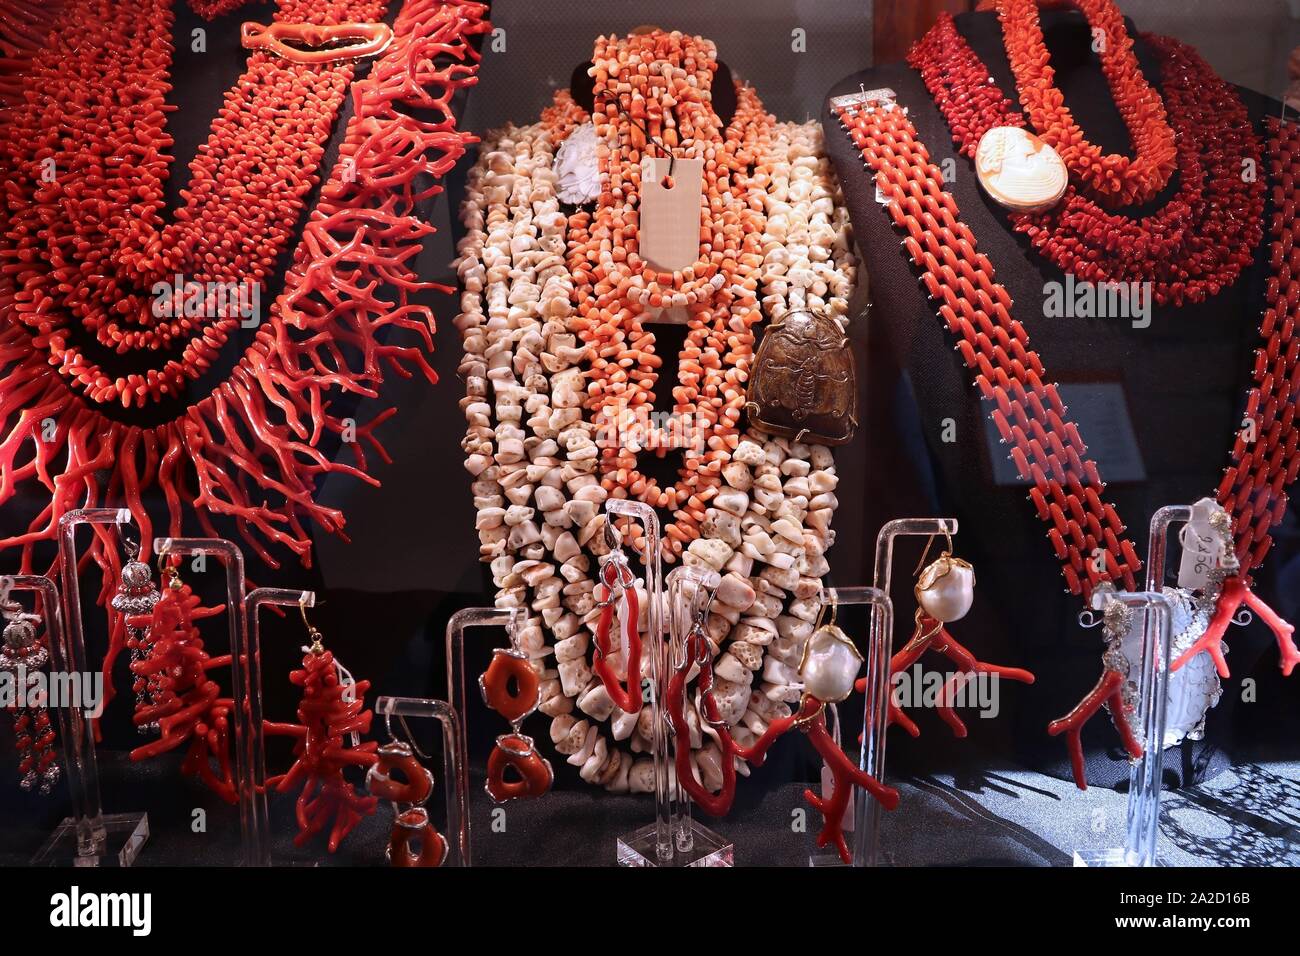 Coral jewellery in Croatia. Jewelry store window display in Korcula Stock  Photo - Alamy